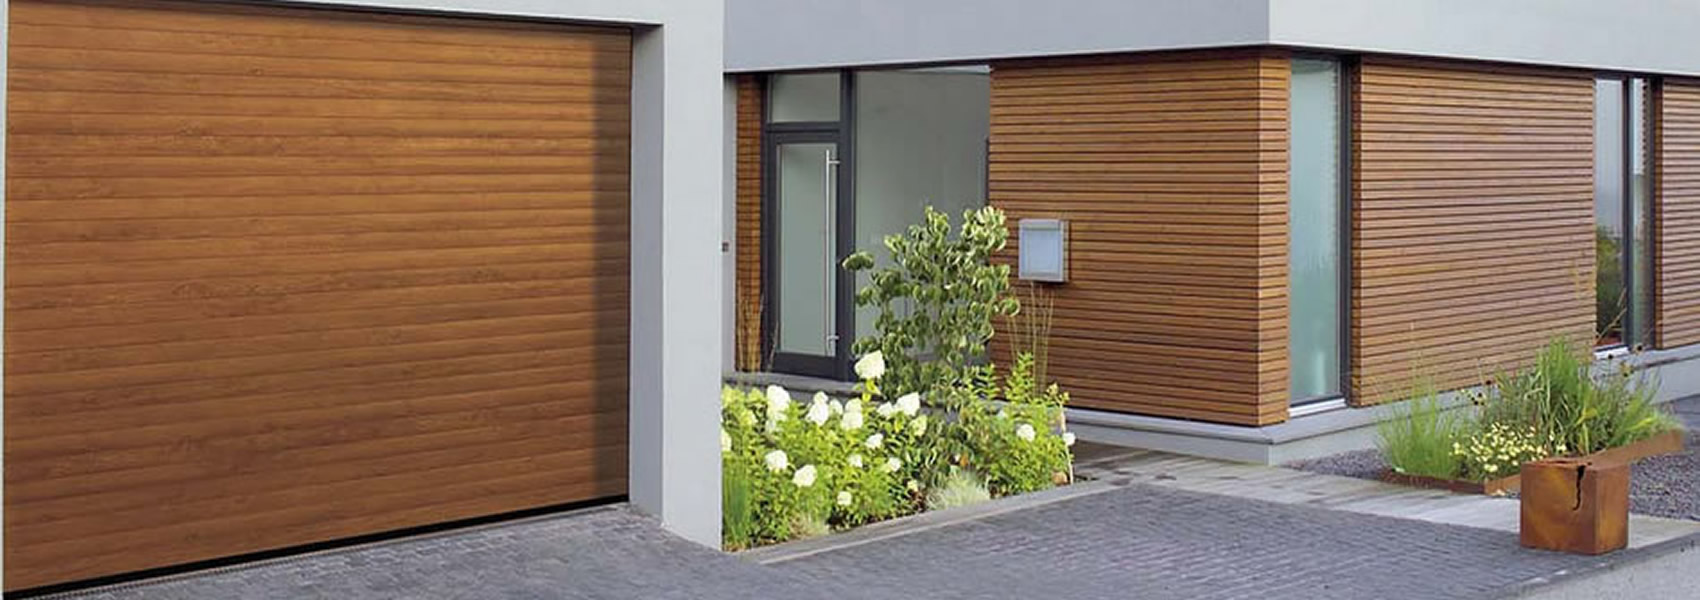 garage door company web design 